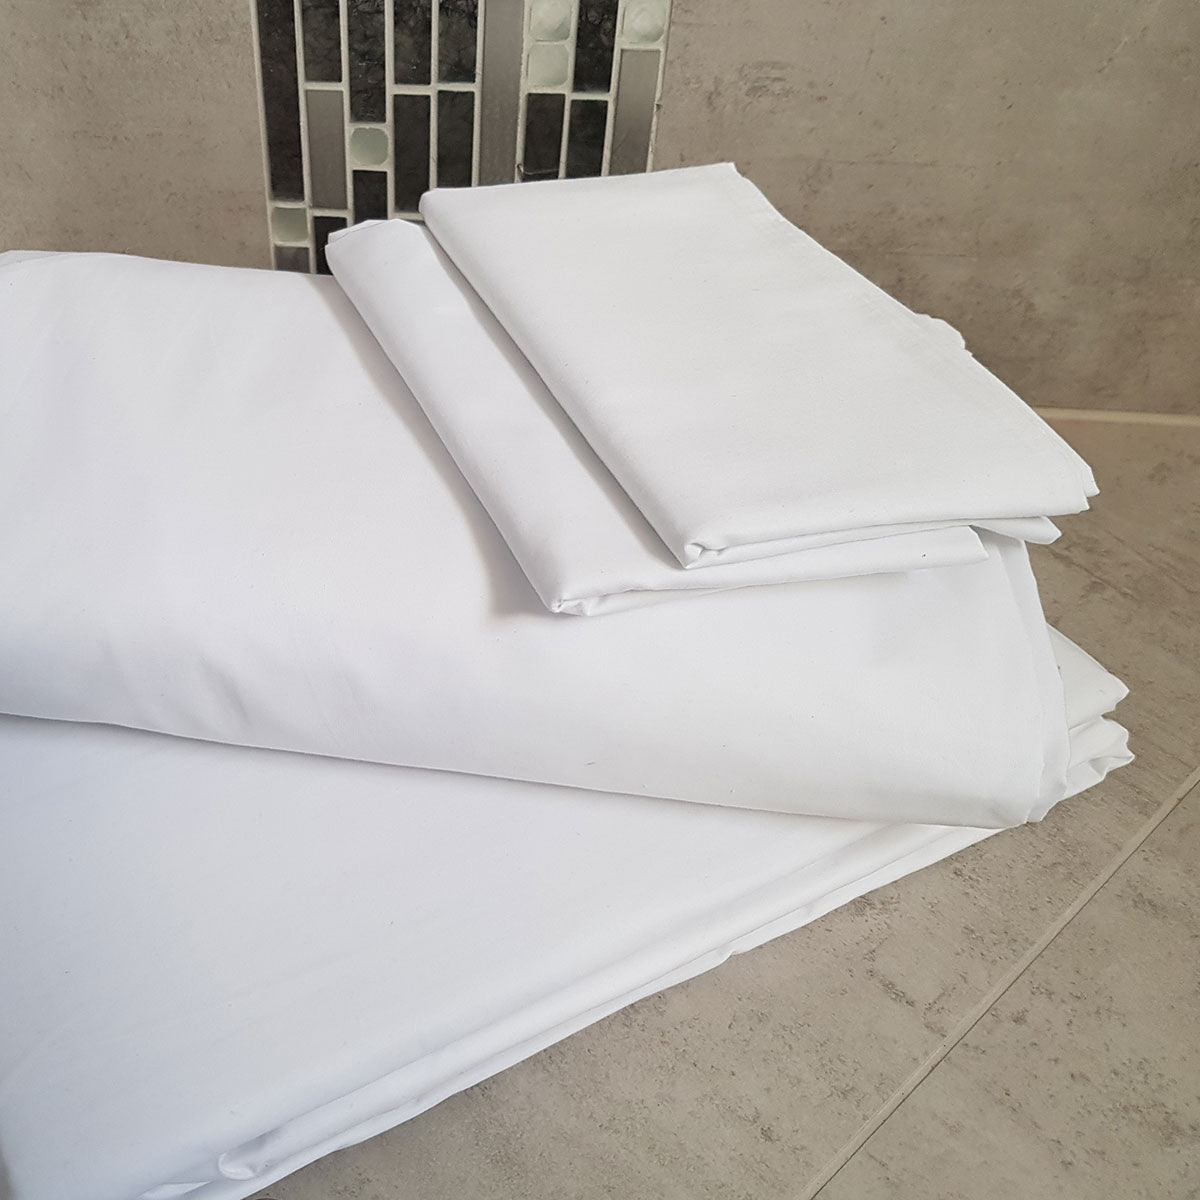 White Bed Sheet Set on Marble Tile